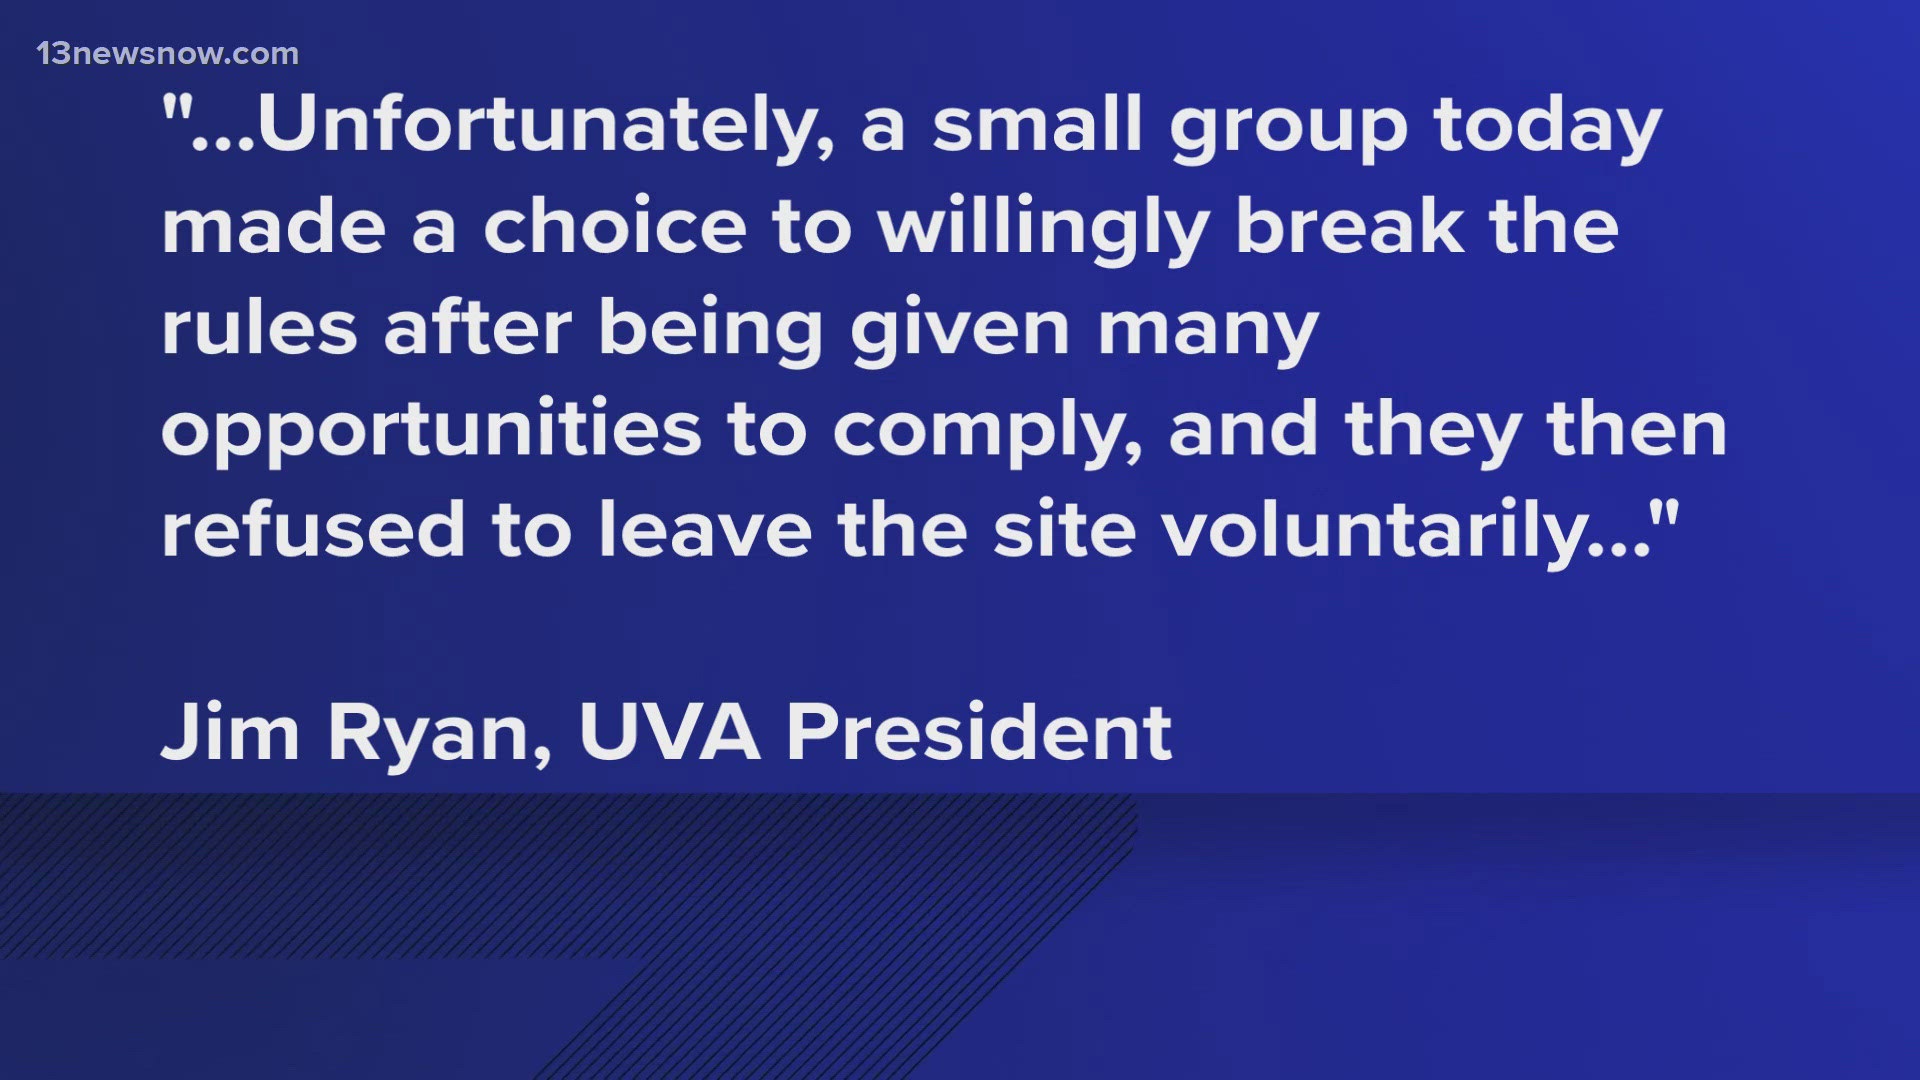 In response, UVA President Jim Ryan released a statement.